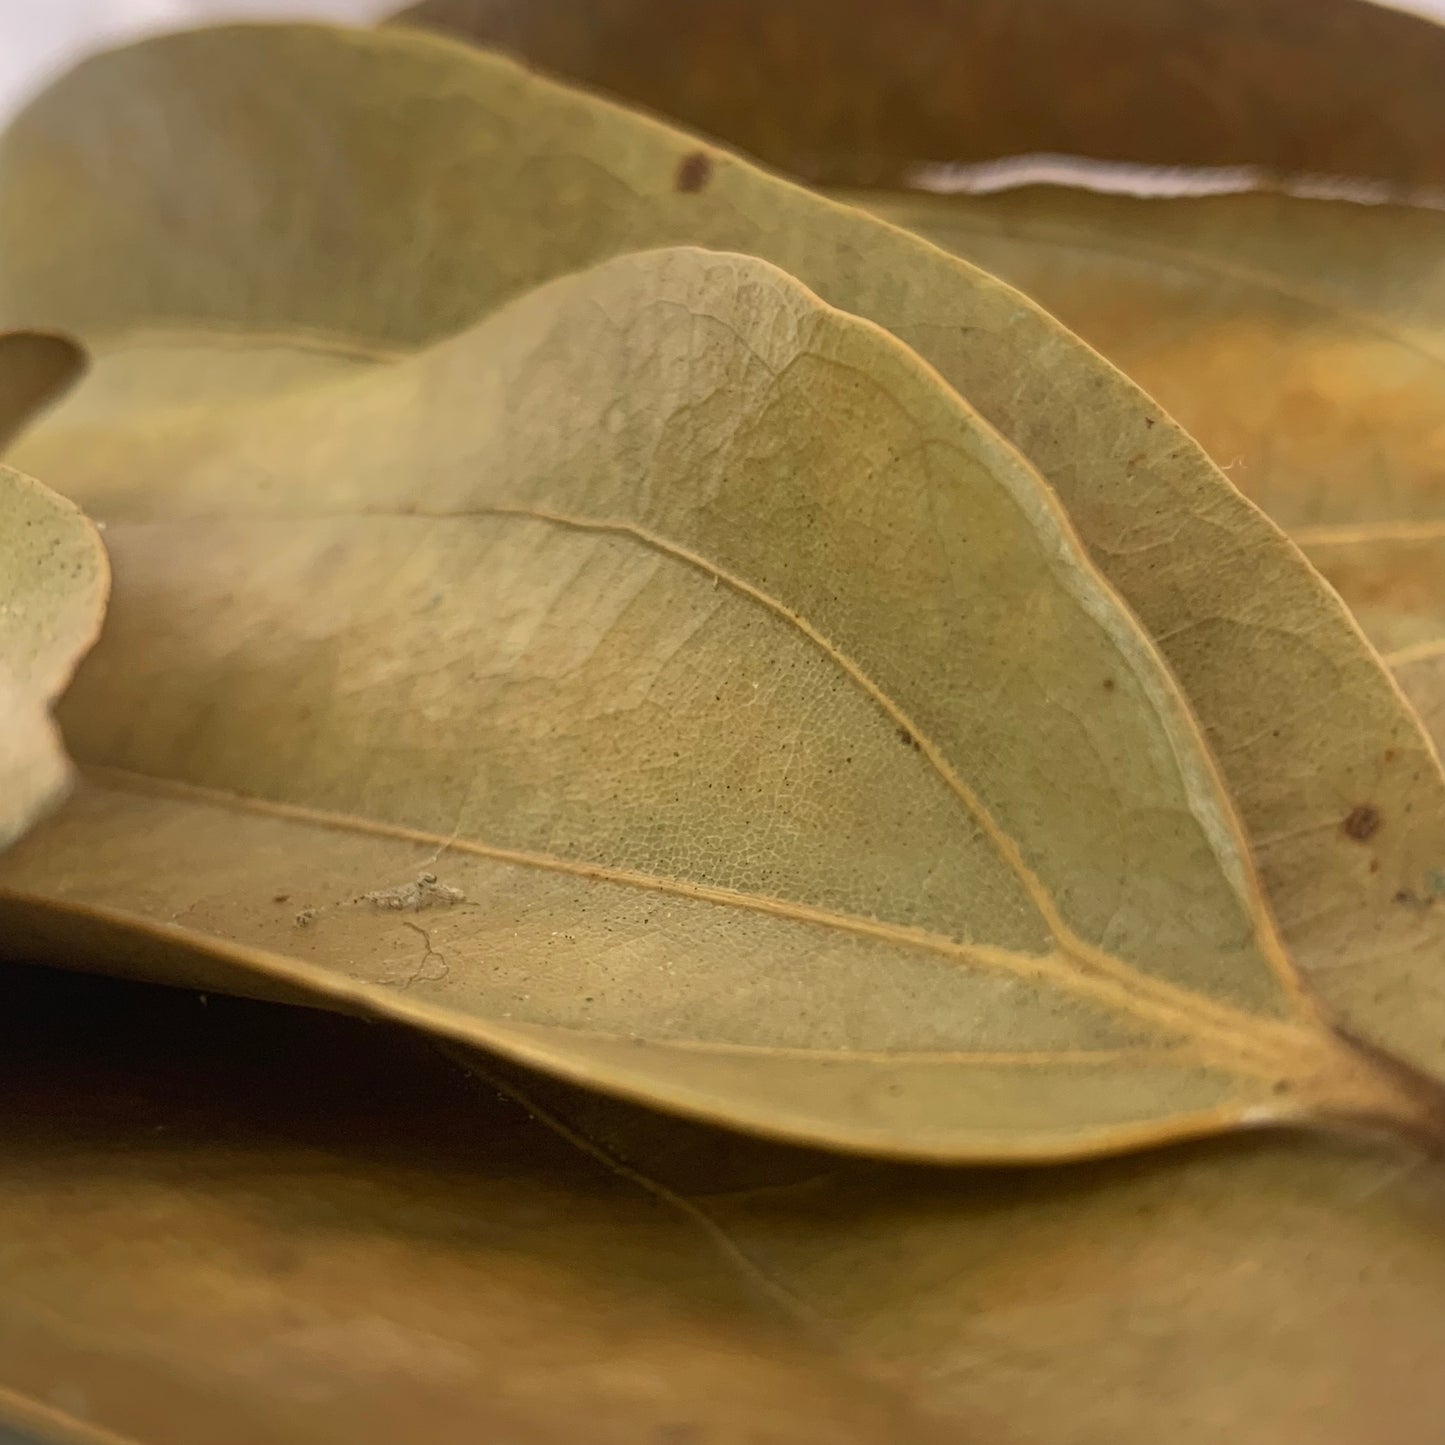 Sun Dried Cinnamon Leaves 100% Pure and Organic